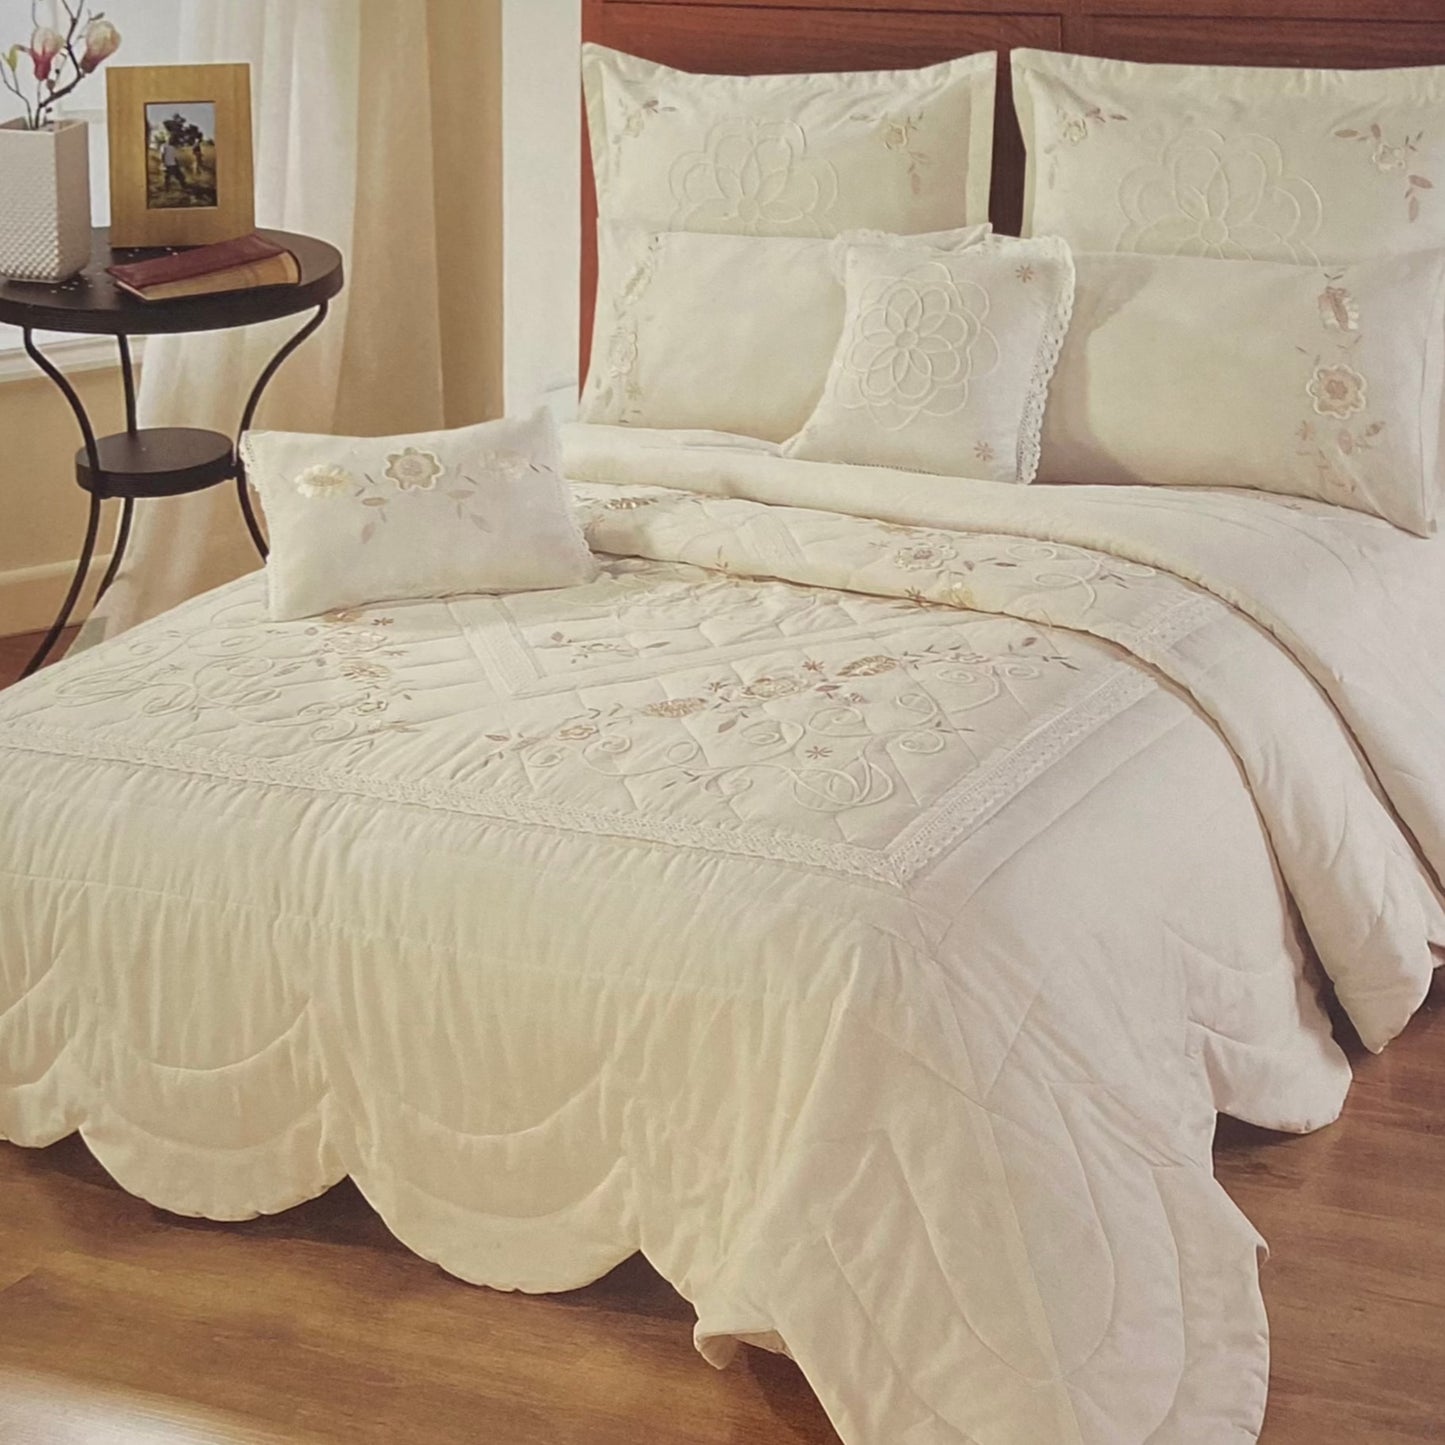 Elegance Bedspread & Pillowshams by Divine by Design